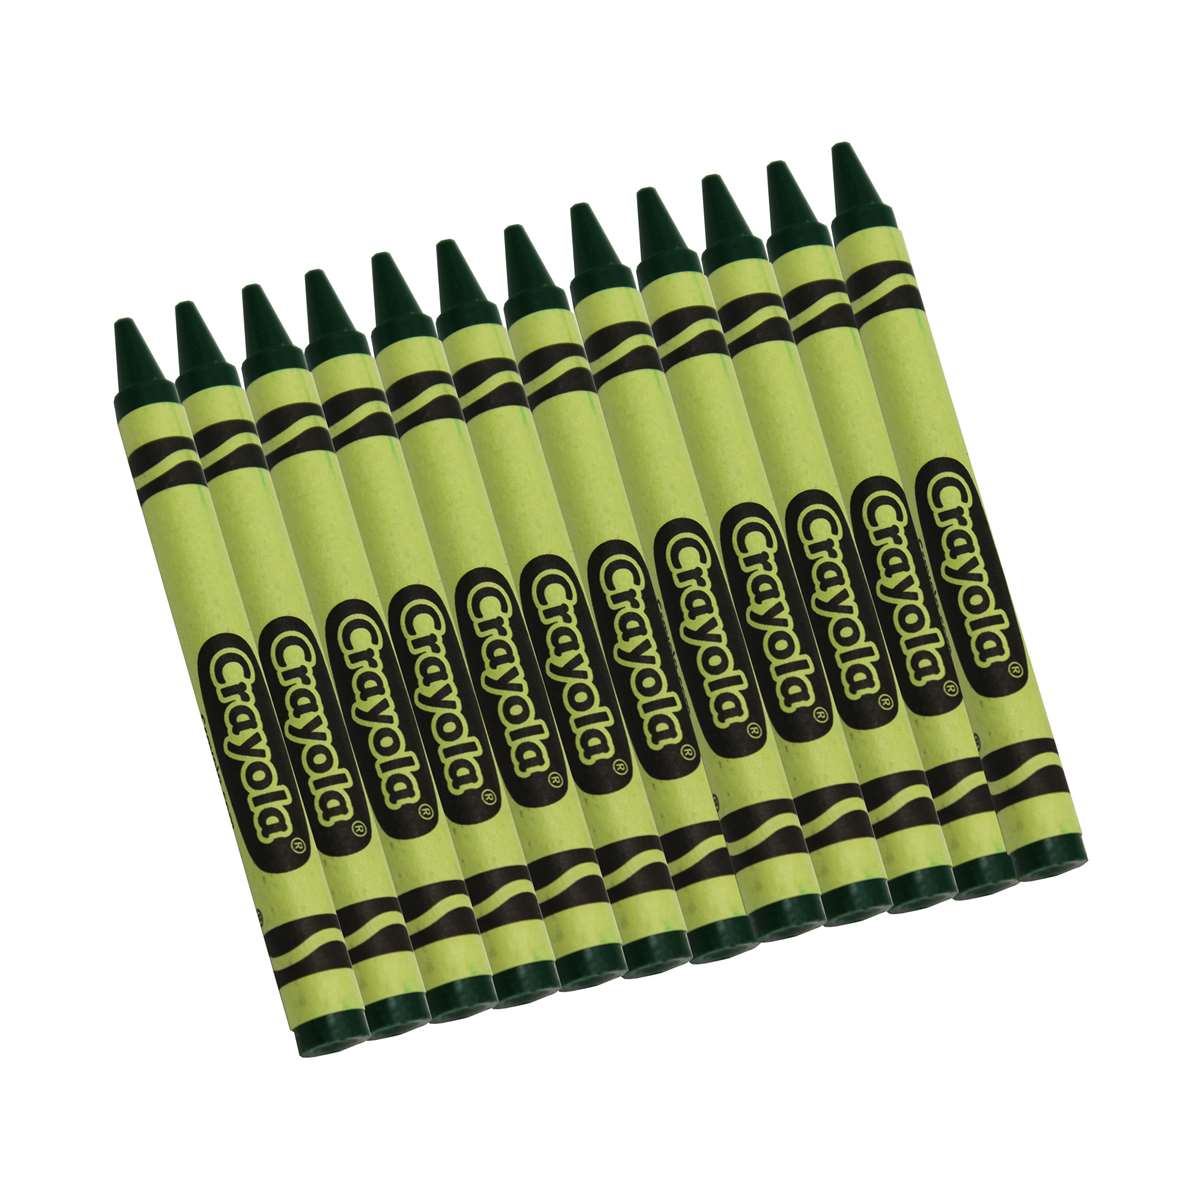 Green crayons Stock Photo by ©vesnac 11248323